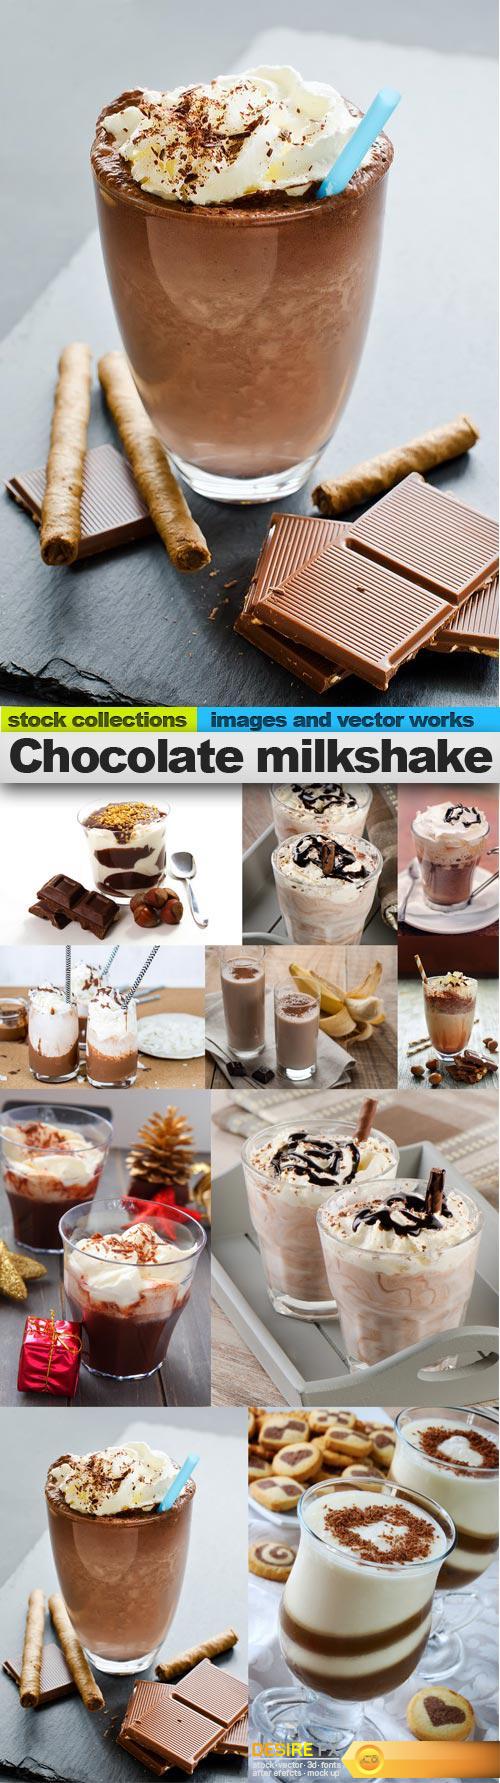 Chocolate milkshake, 10 x UHQ JPEG